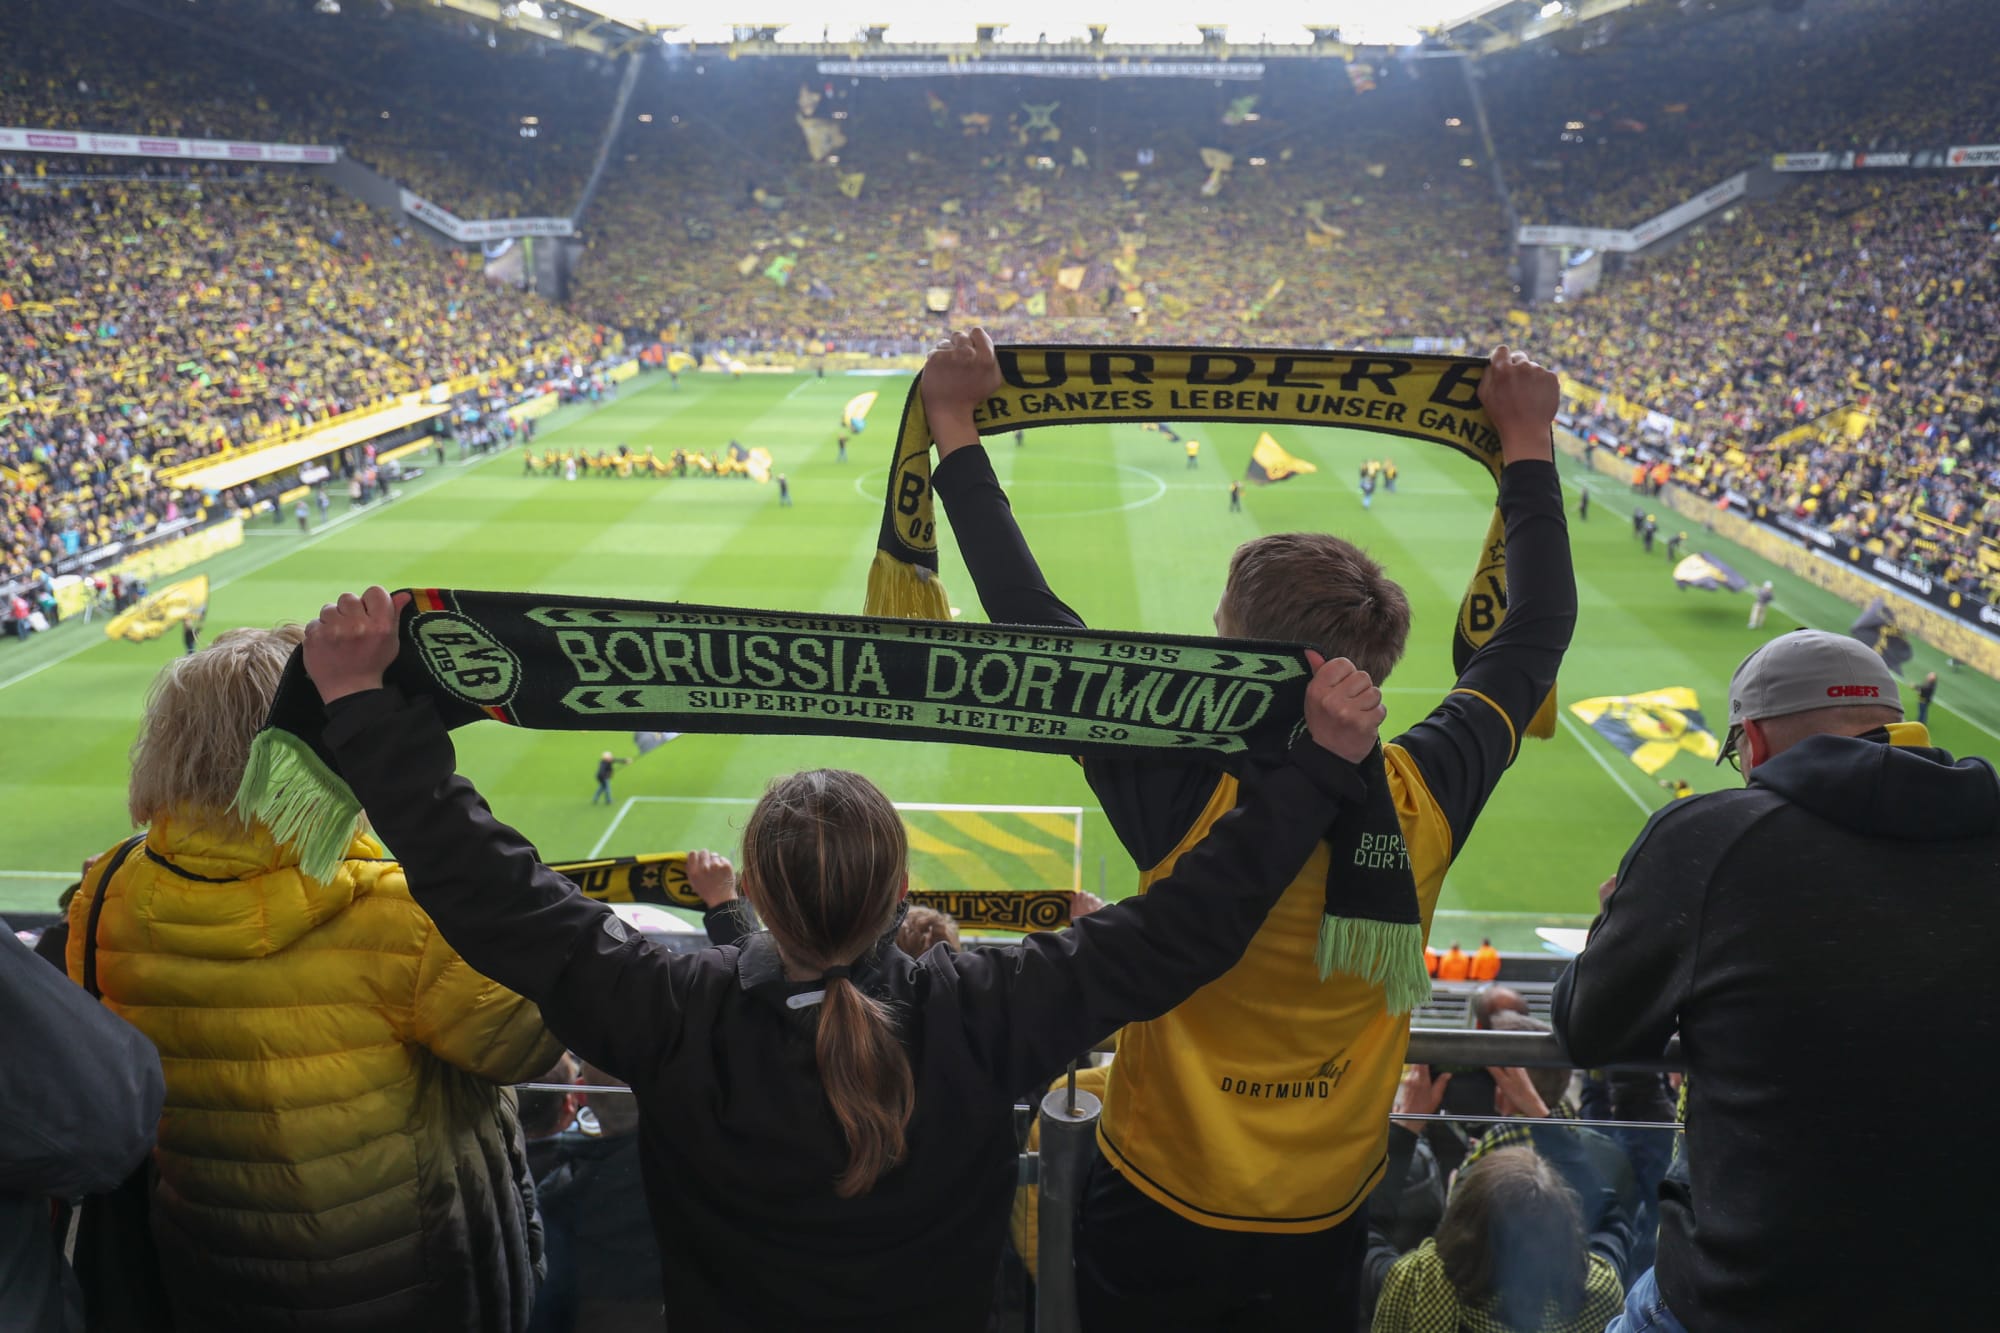 My Borussia Dortmund matchday experience at the Westfalenstadion